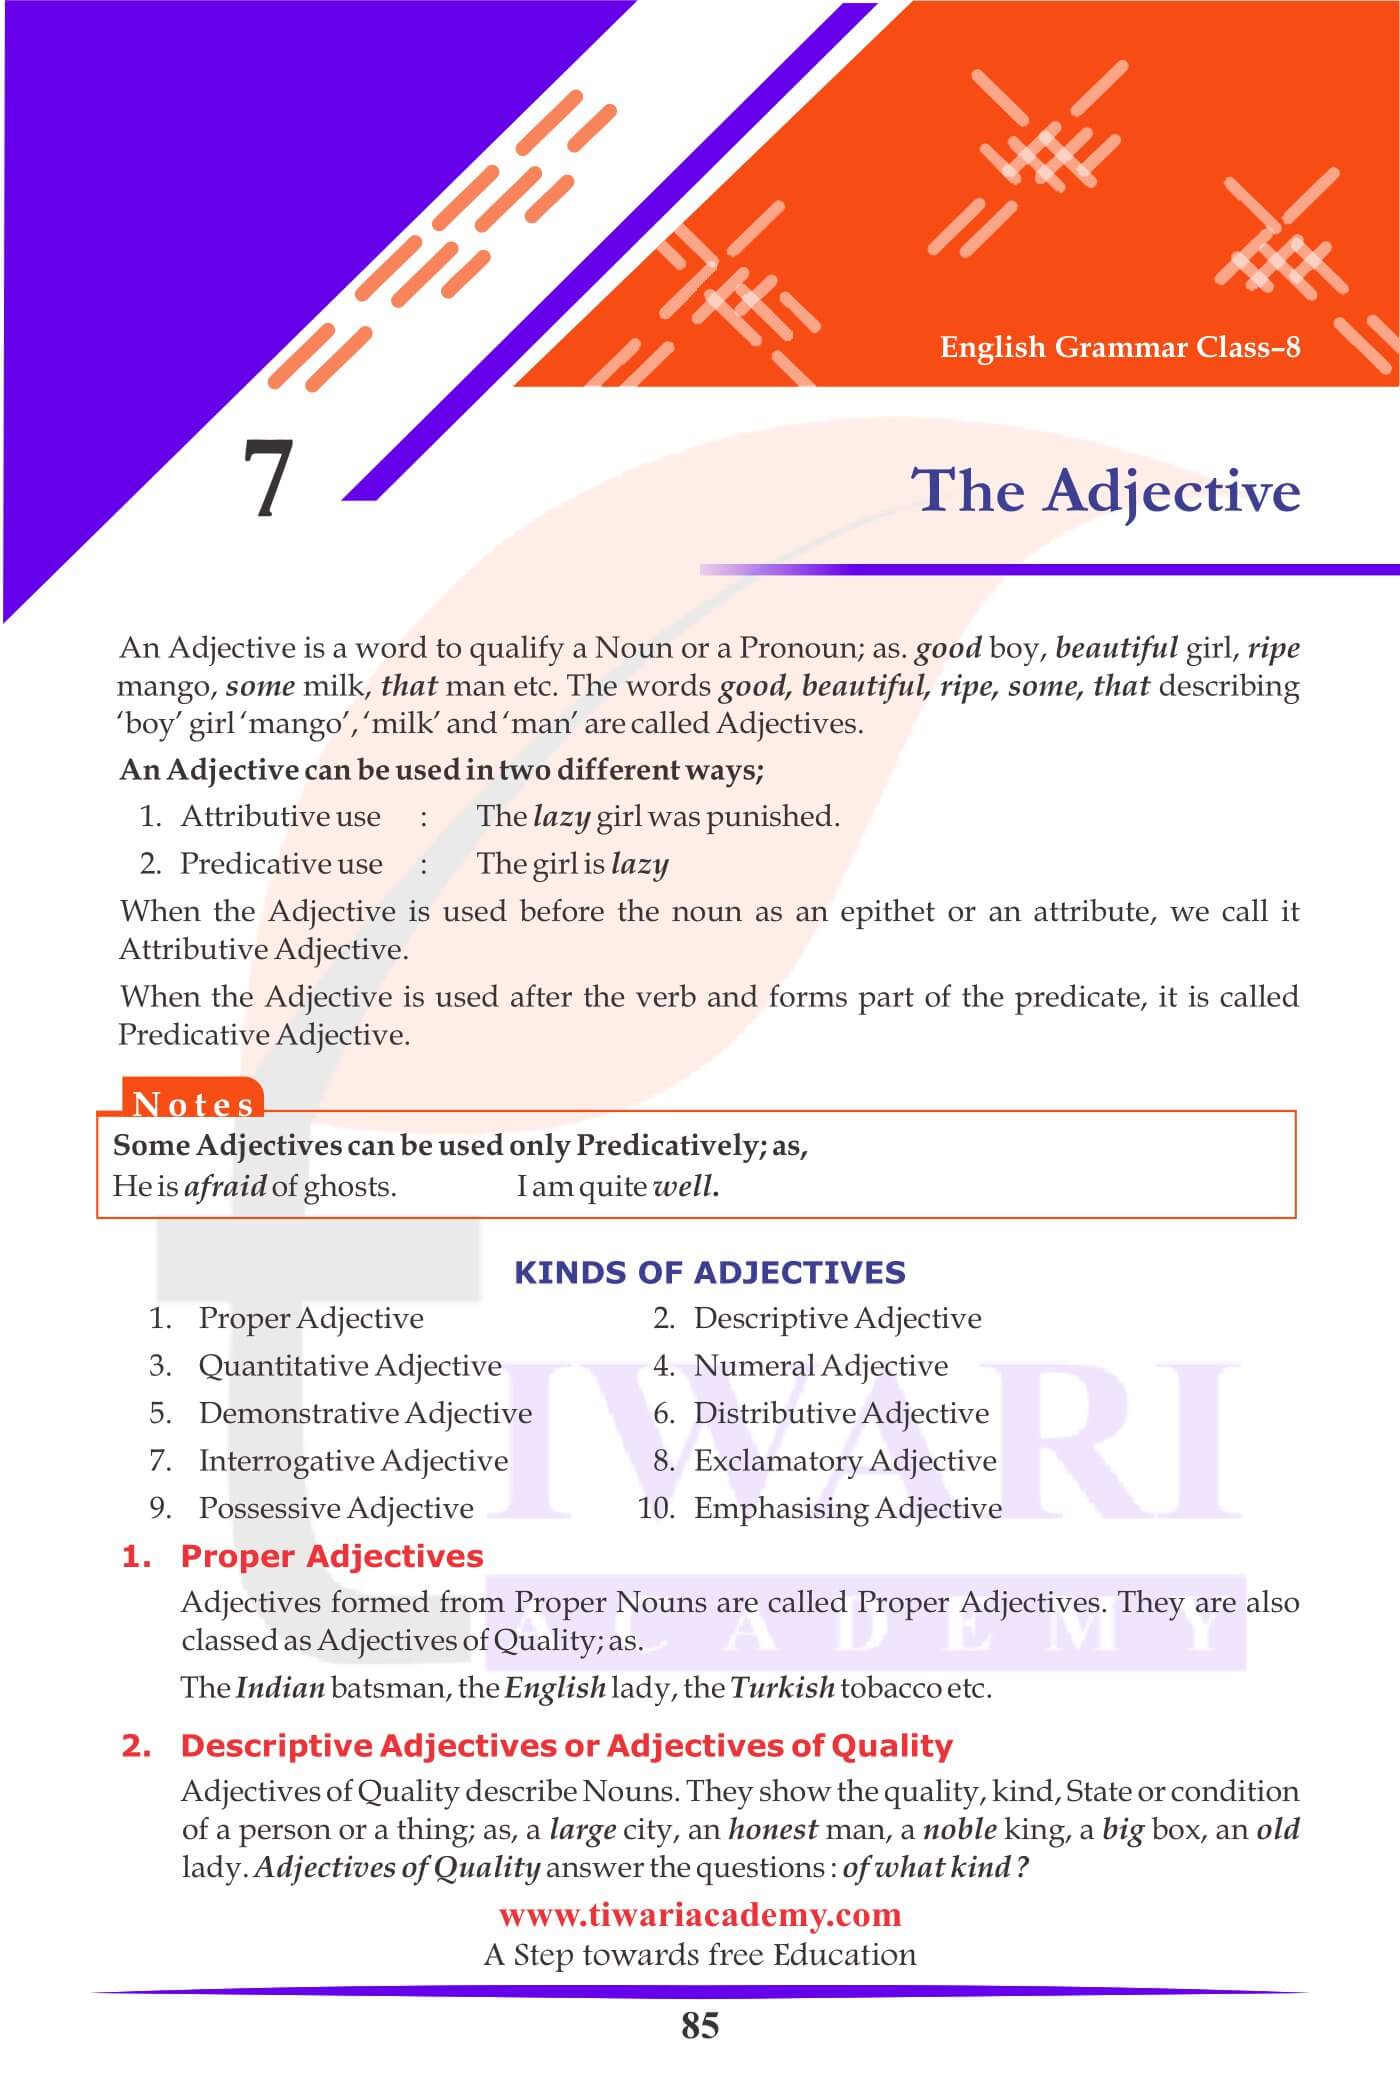 Class 8 English Grammar Chapter 7 The Adjective